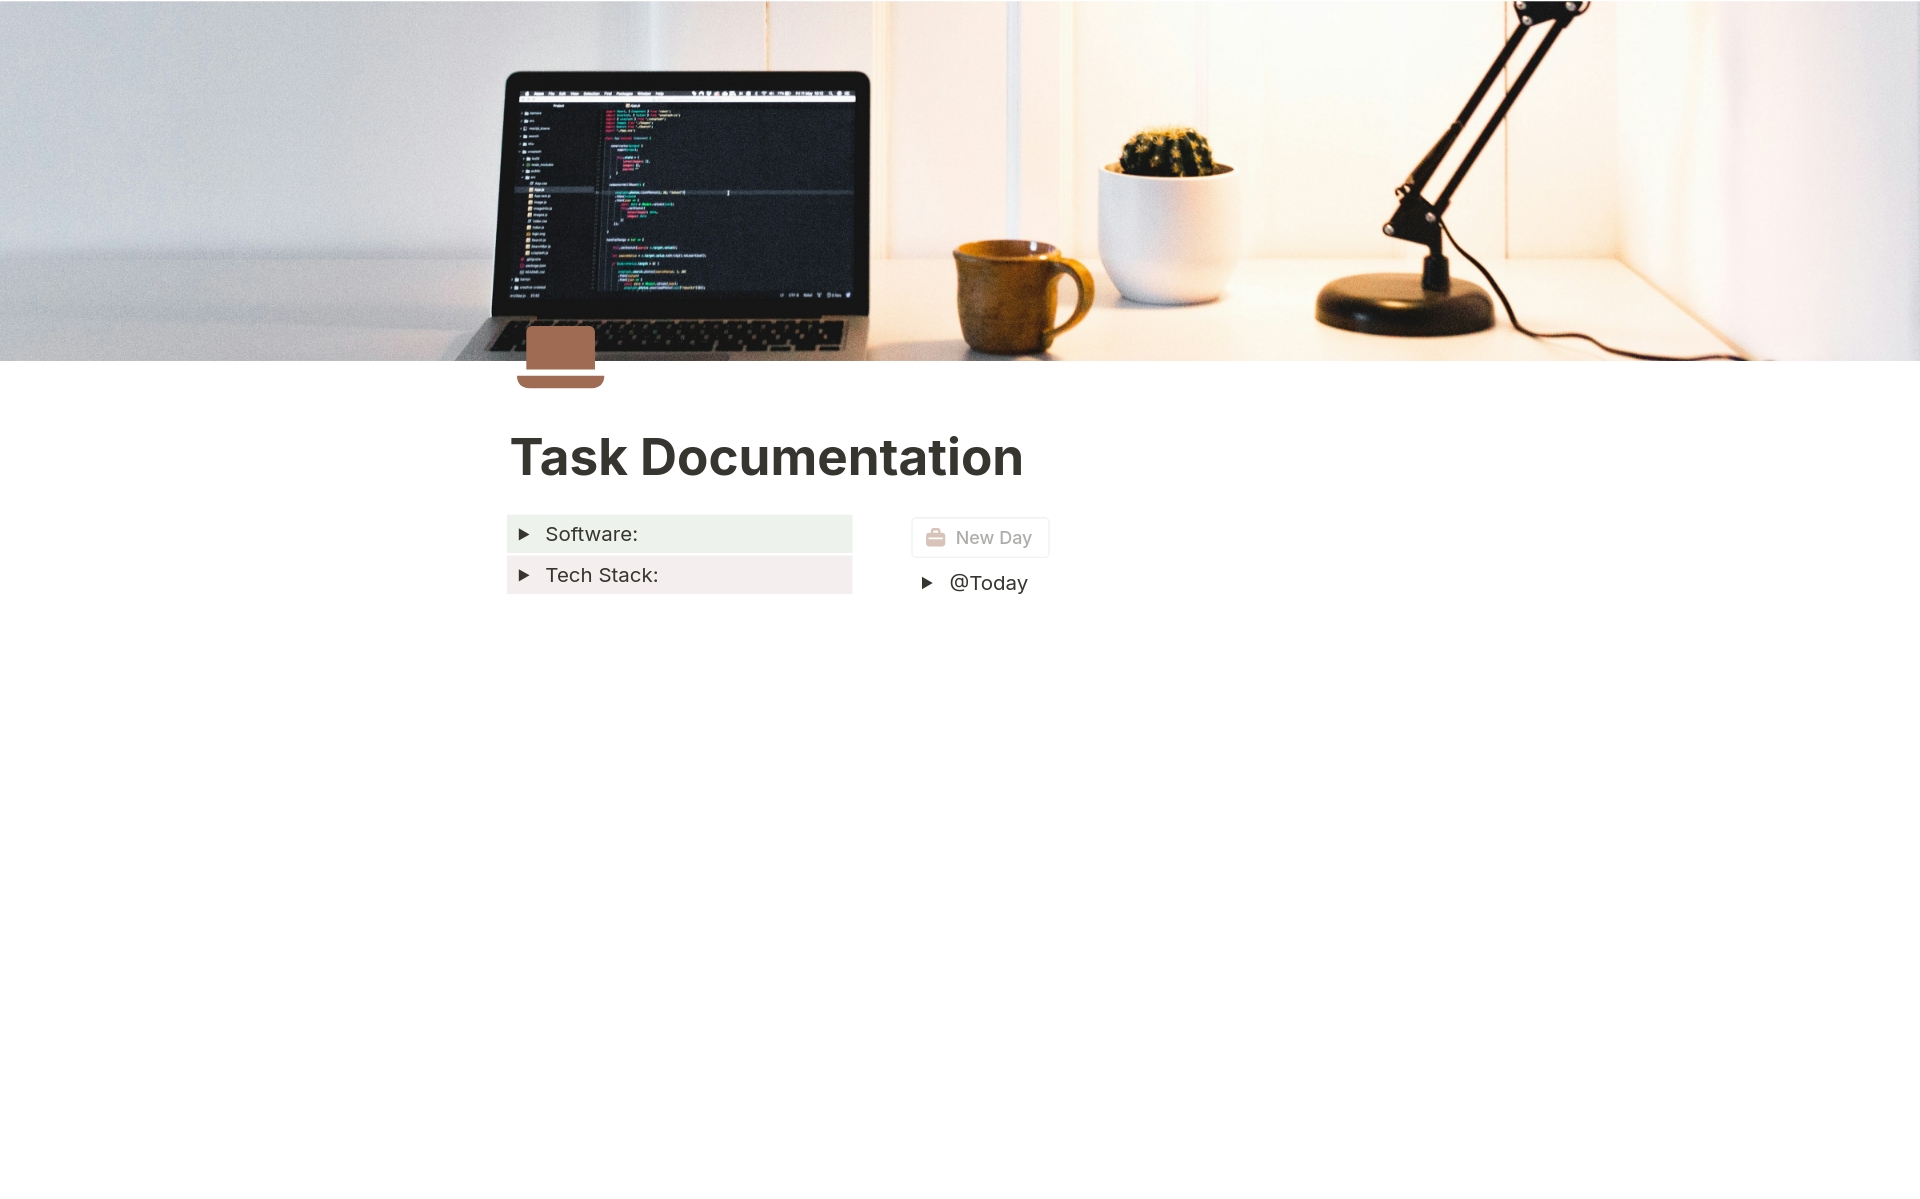 Aperçu du modèle de Task Documentation